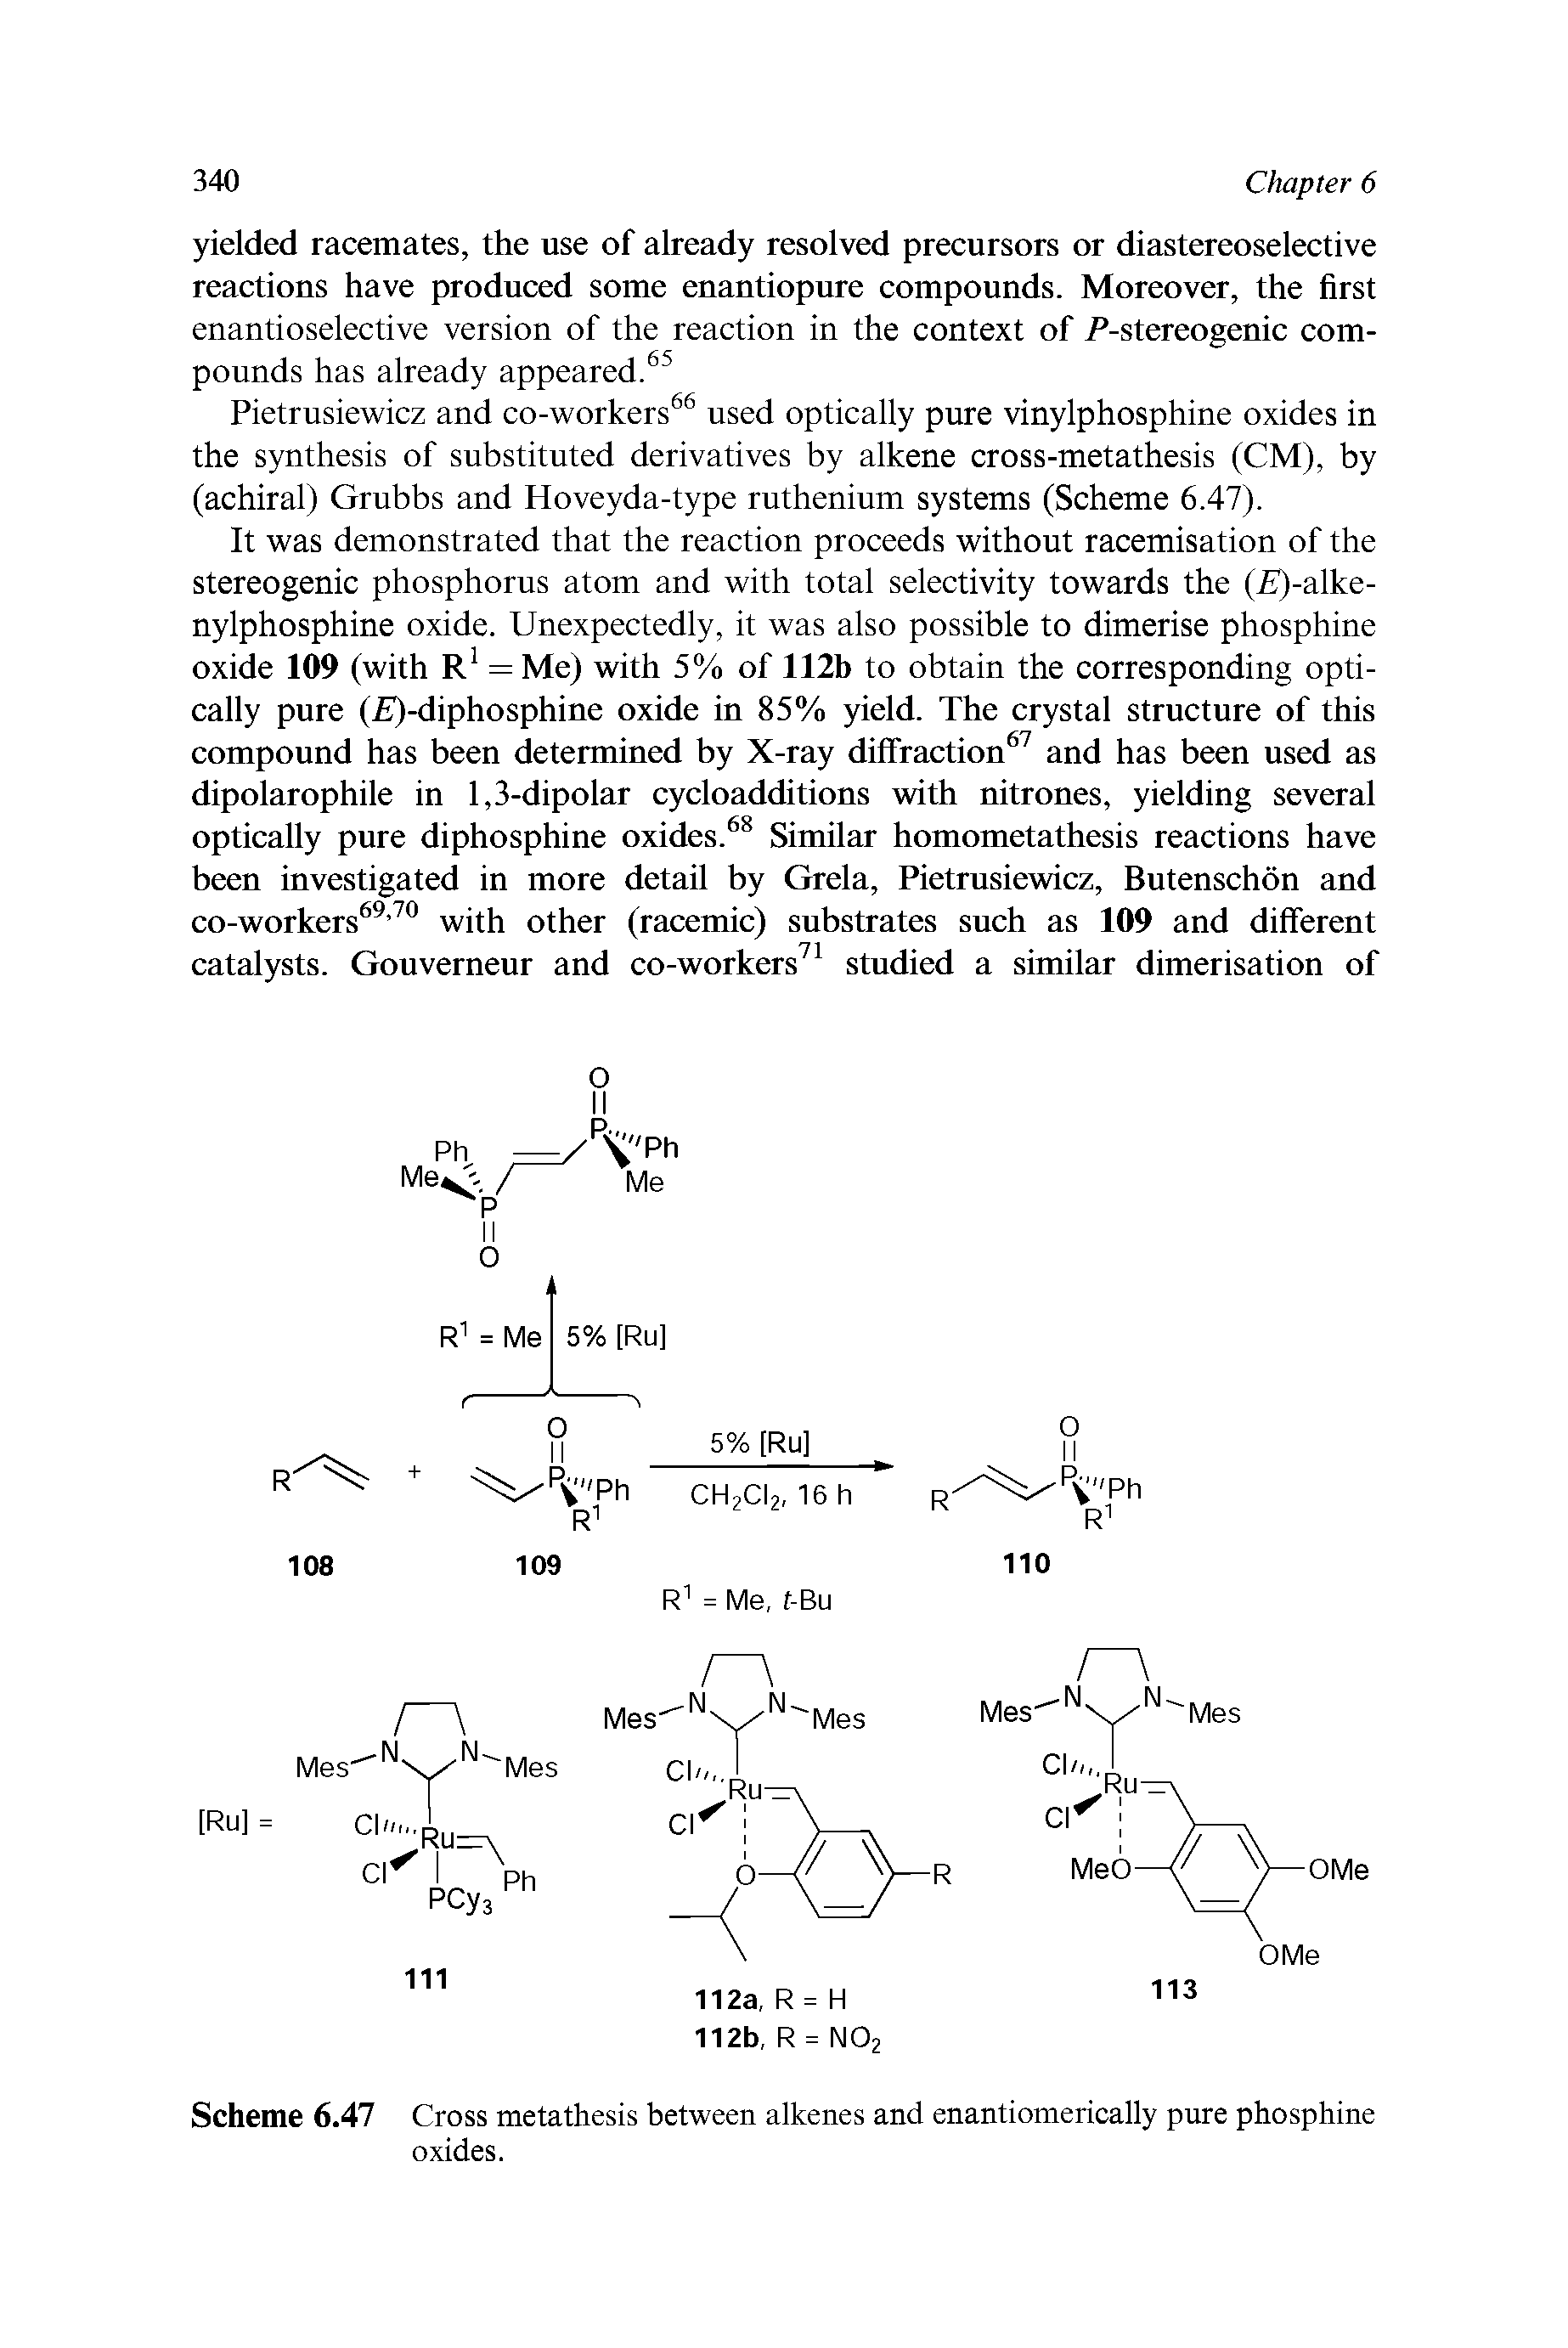 Scheme 6.47 Cross metathesis between alkenes and enantiomerically pure phosphine oxides.